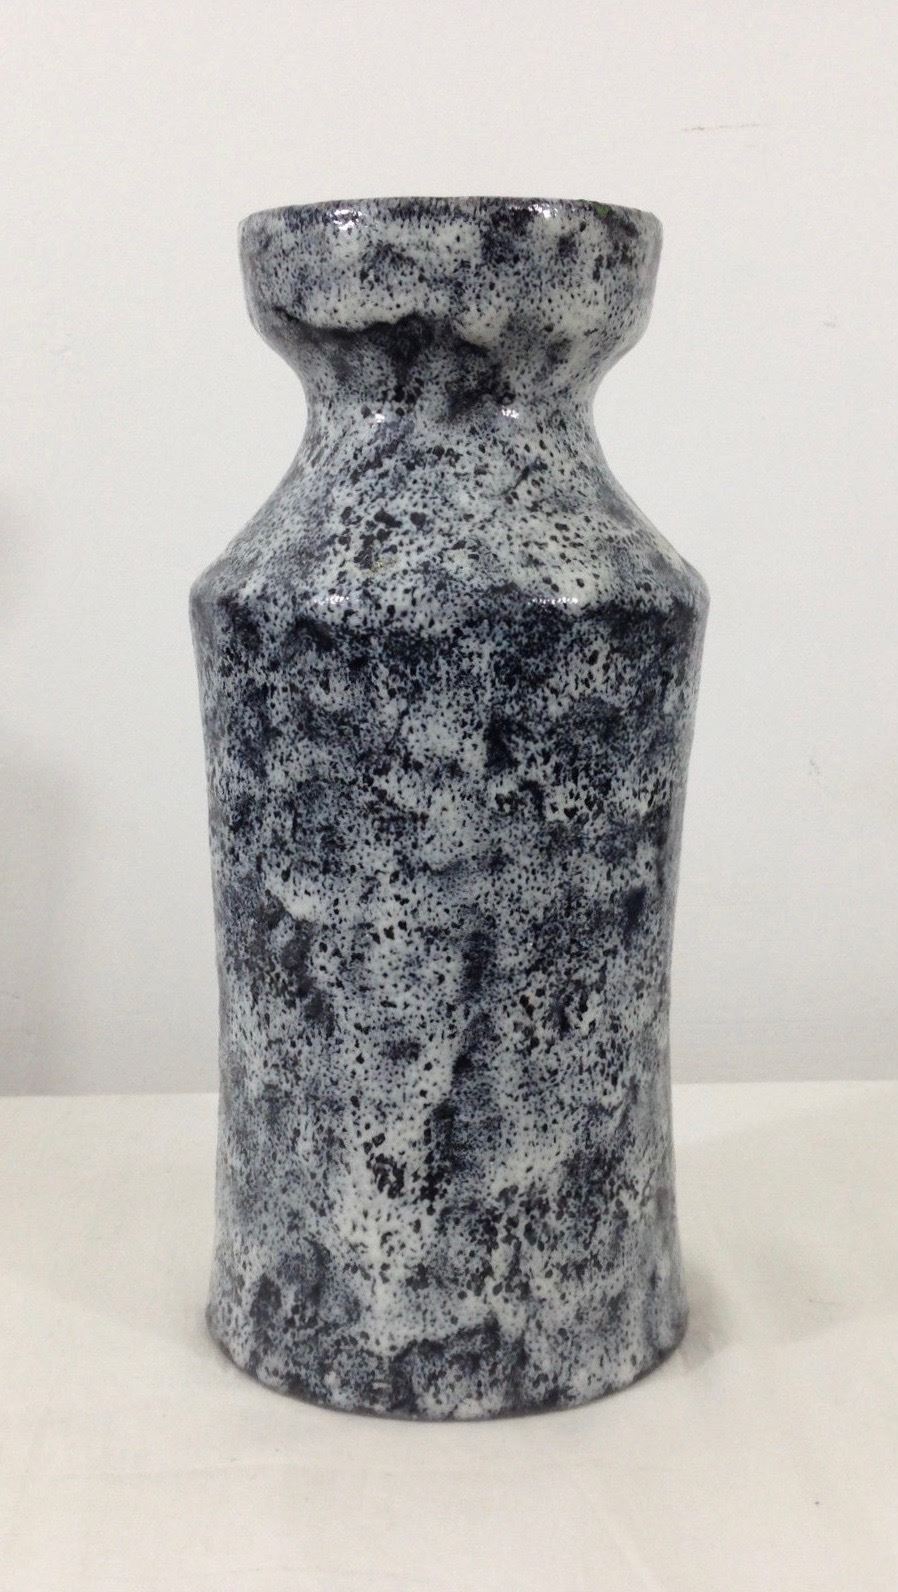 Italian Ceramic Vase by Raymor